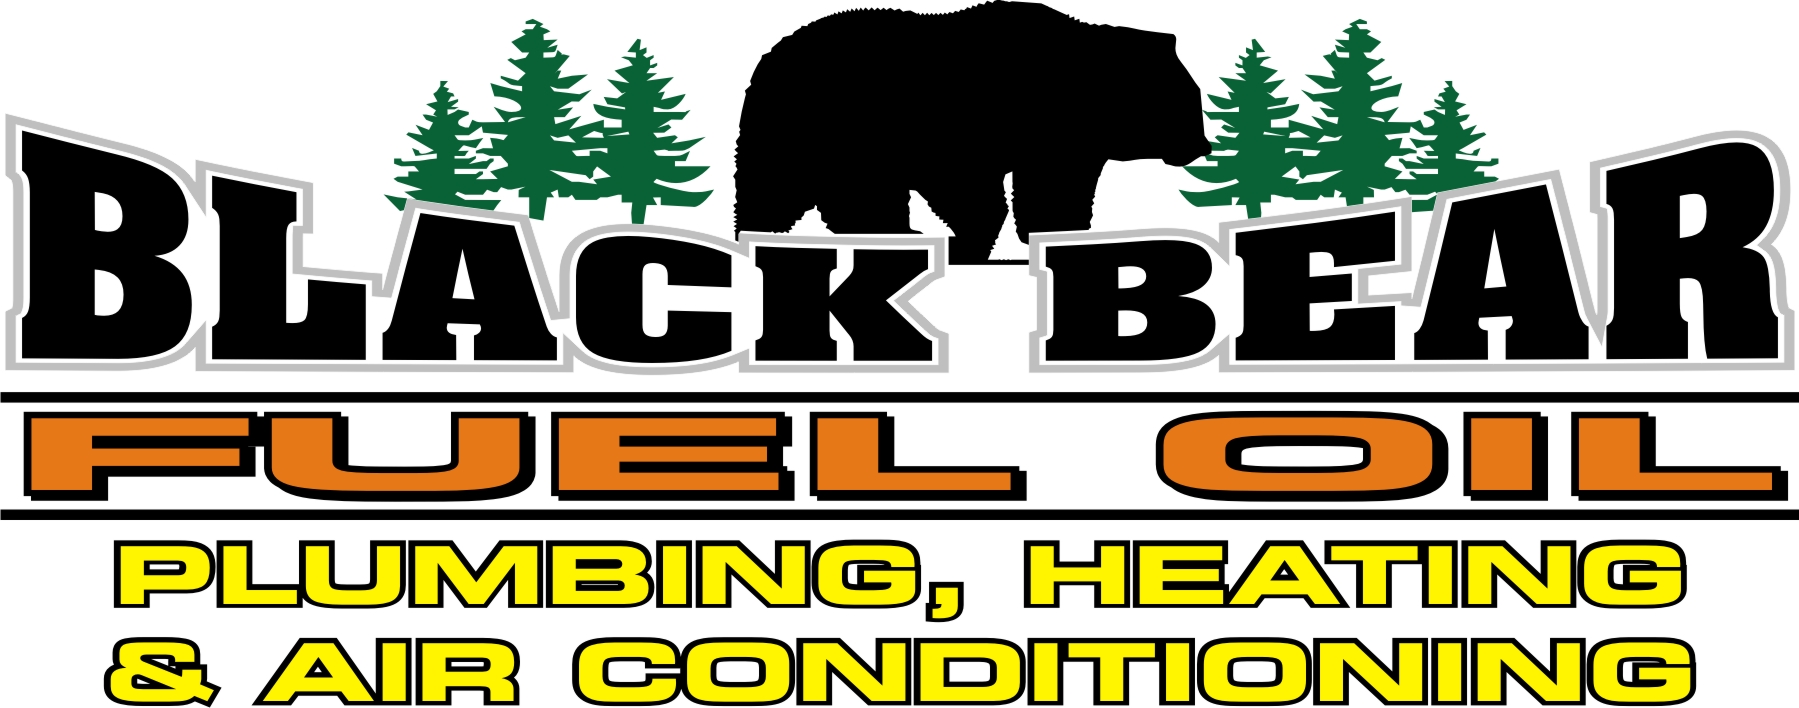 Black Bear Fuel Oil